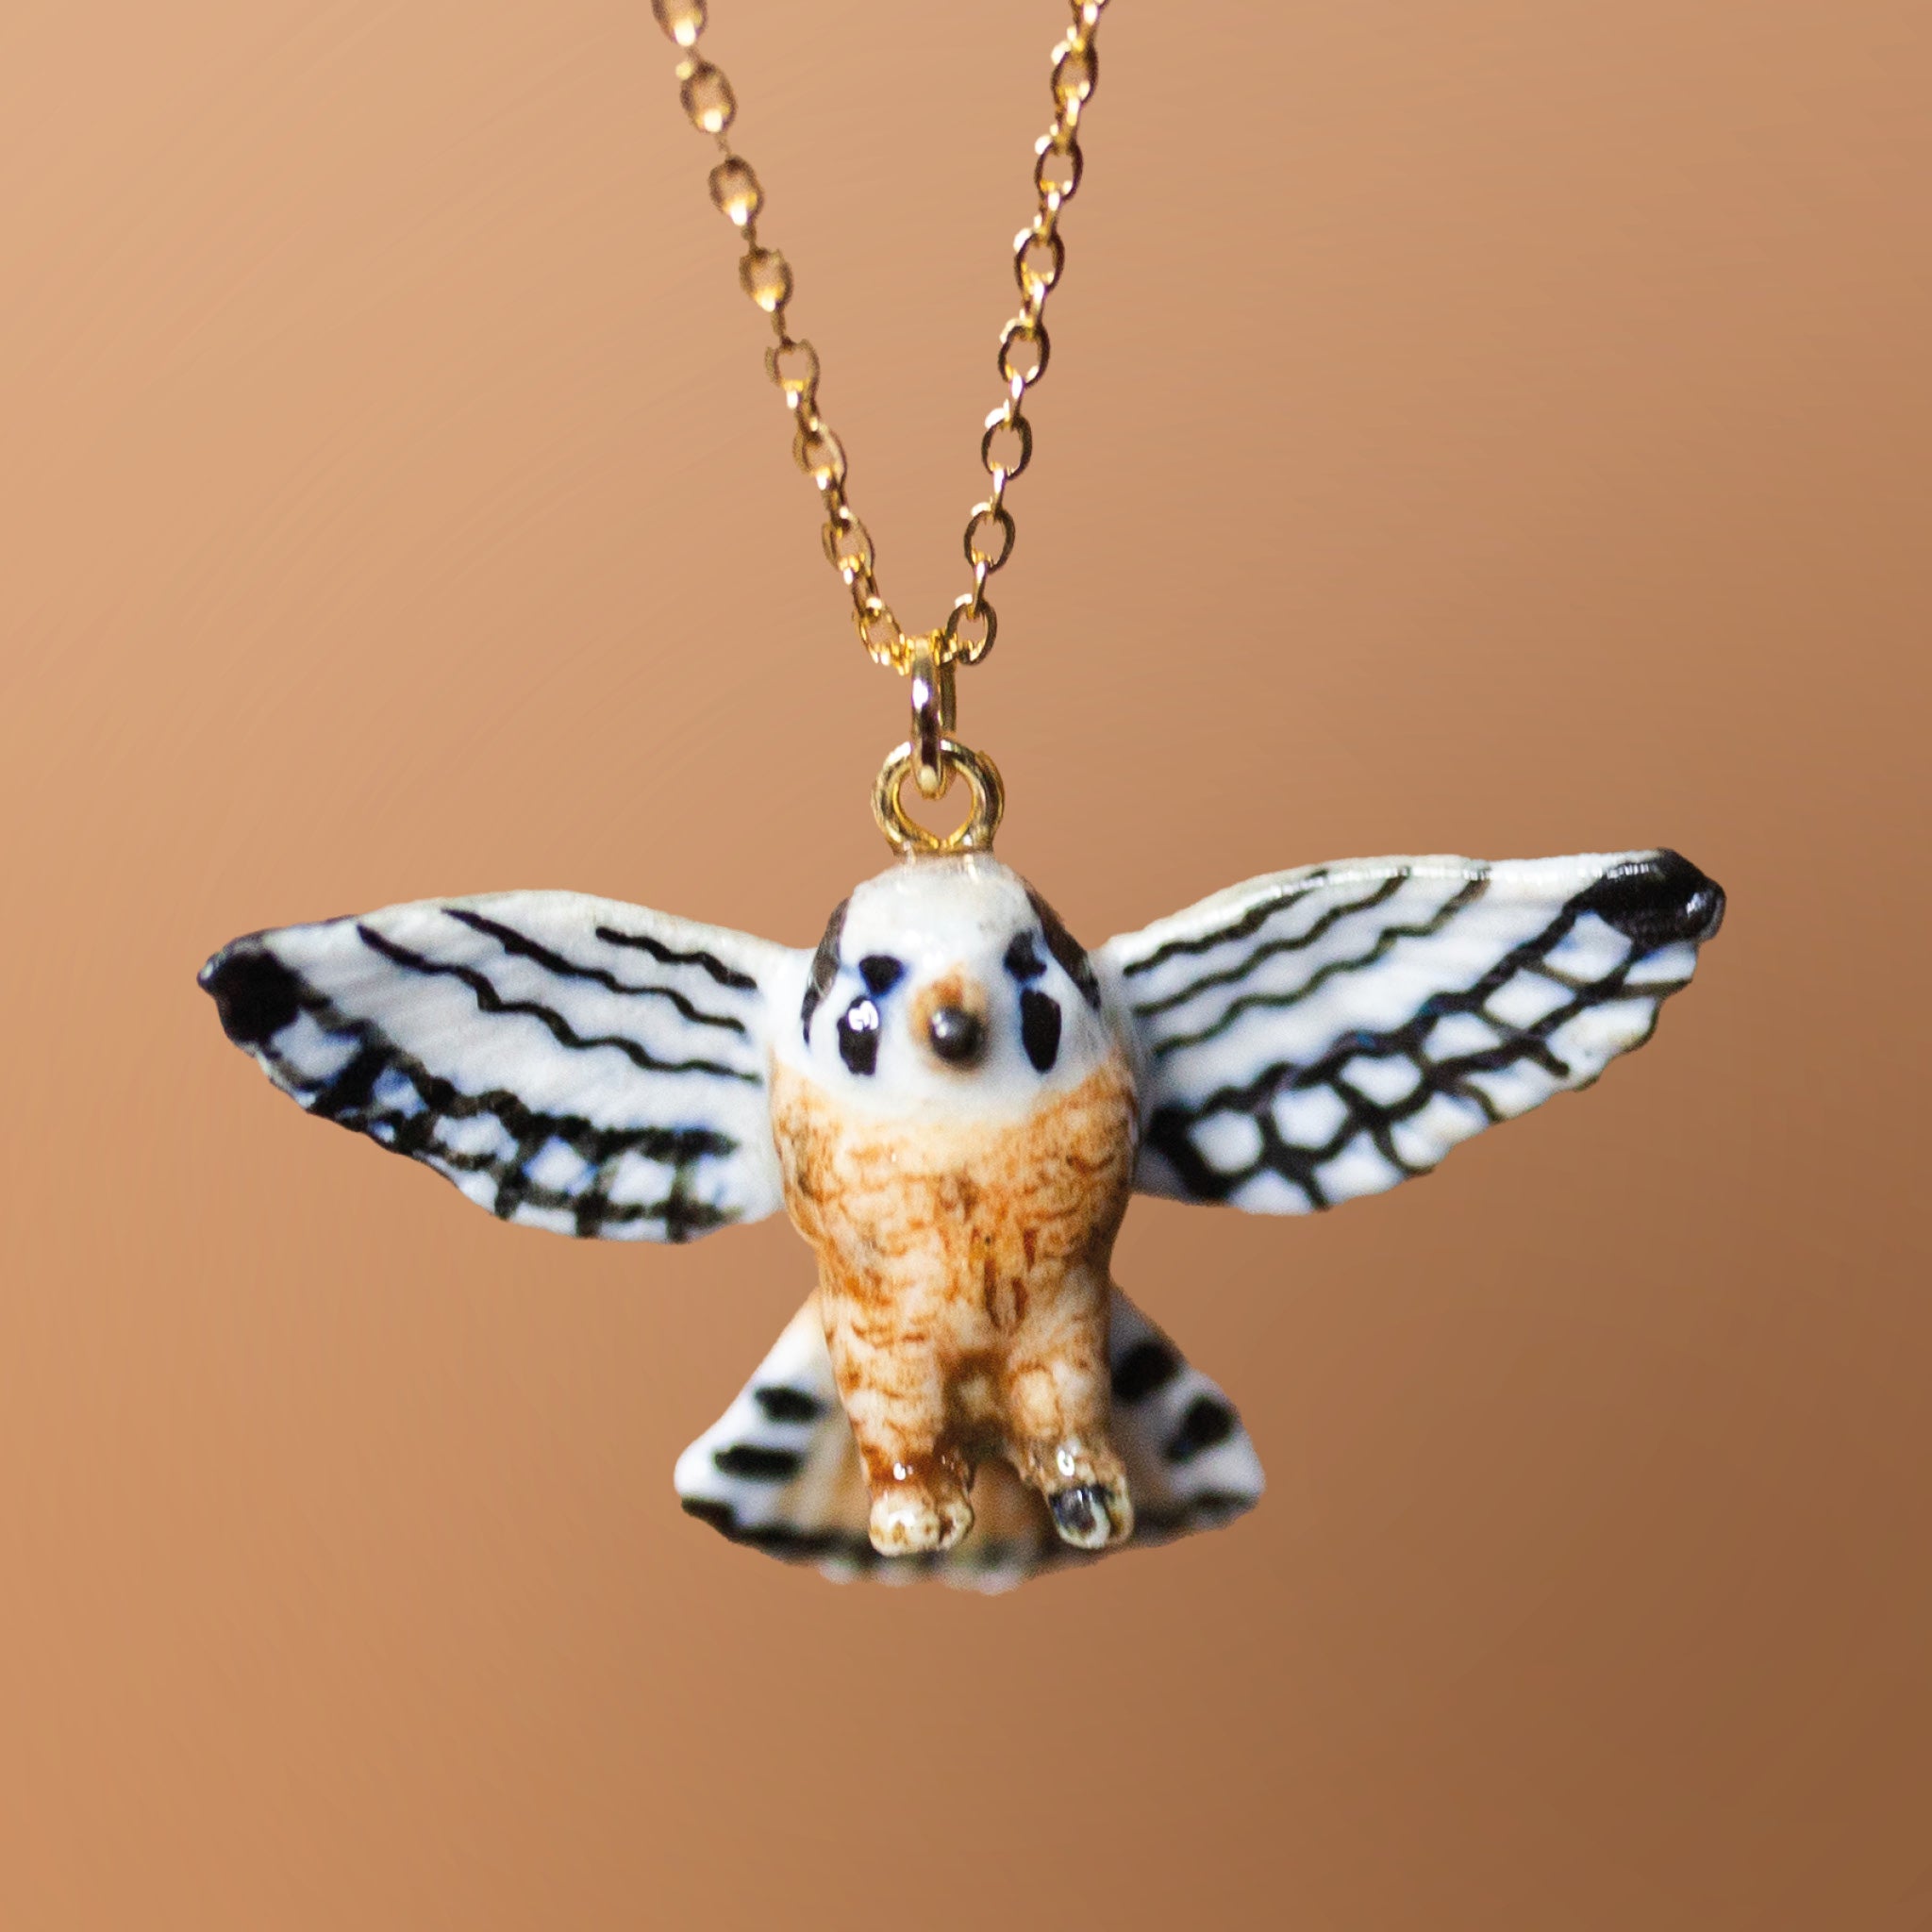 Kestrel Falcon Necklace | Camp Hollow Ceramic Animal Jewelry